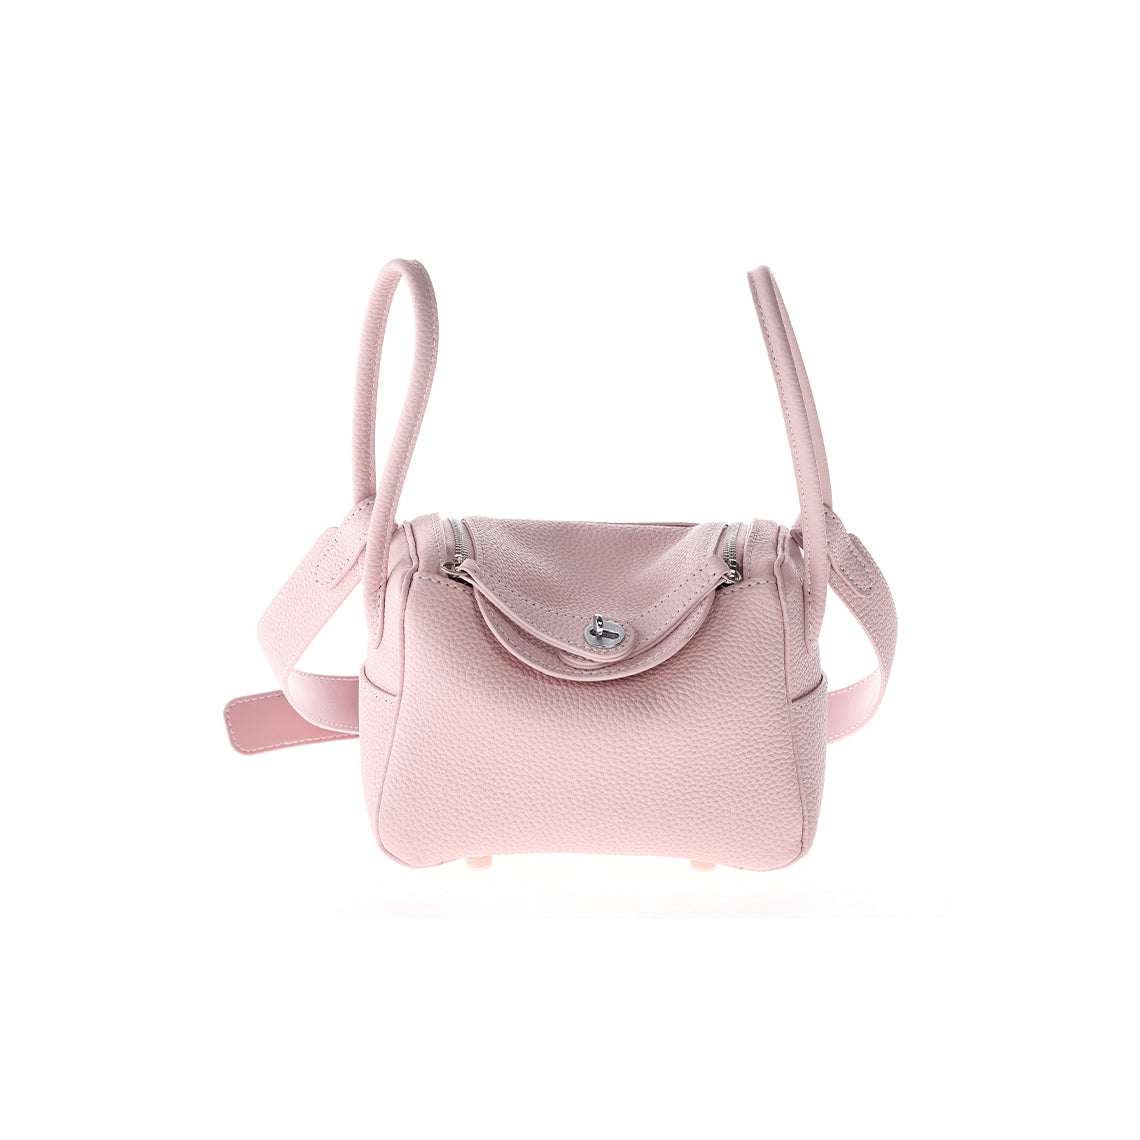 Top Grain Leather Fashion Lindi Handbag DIY Kit | Extra 15% Price Drop at Checkout